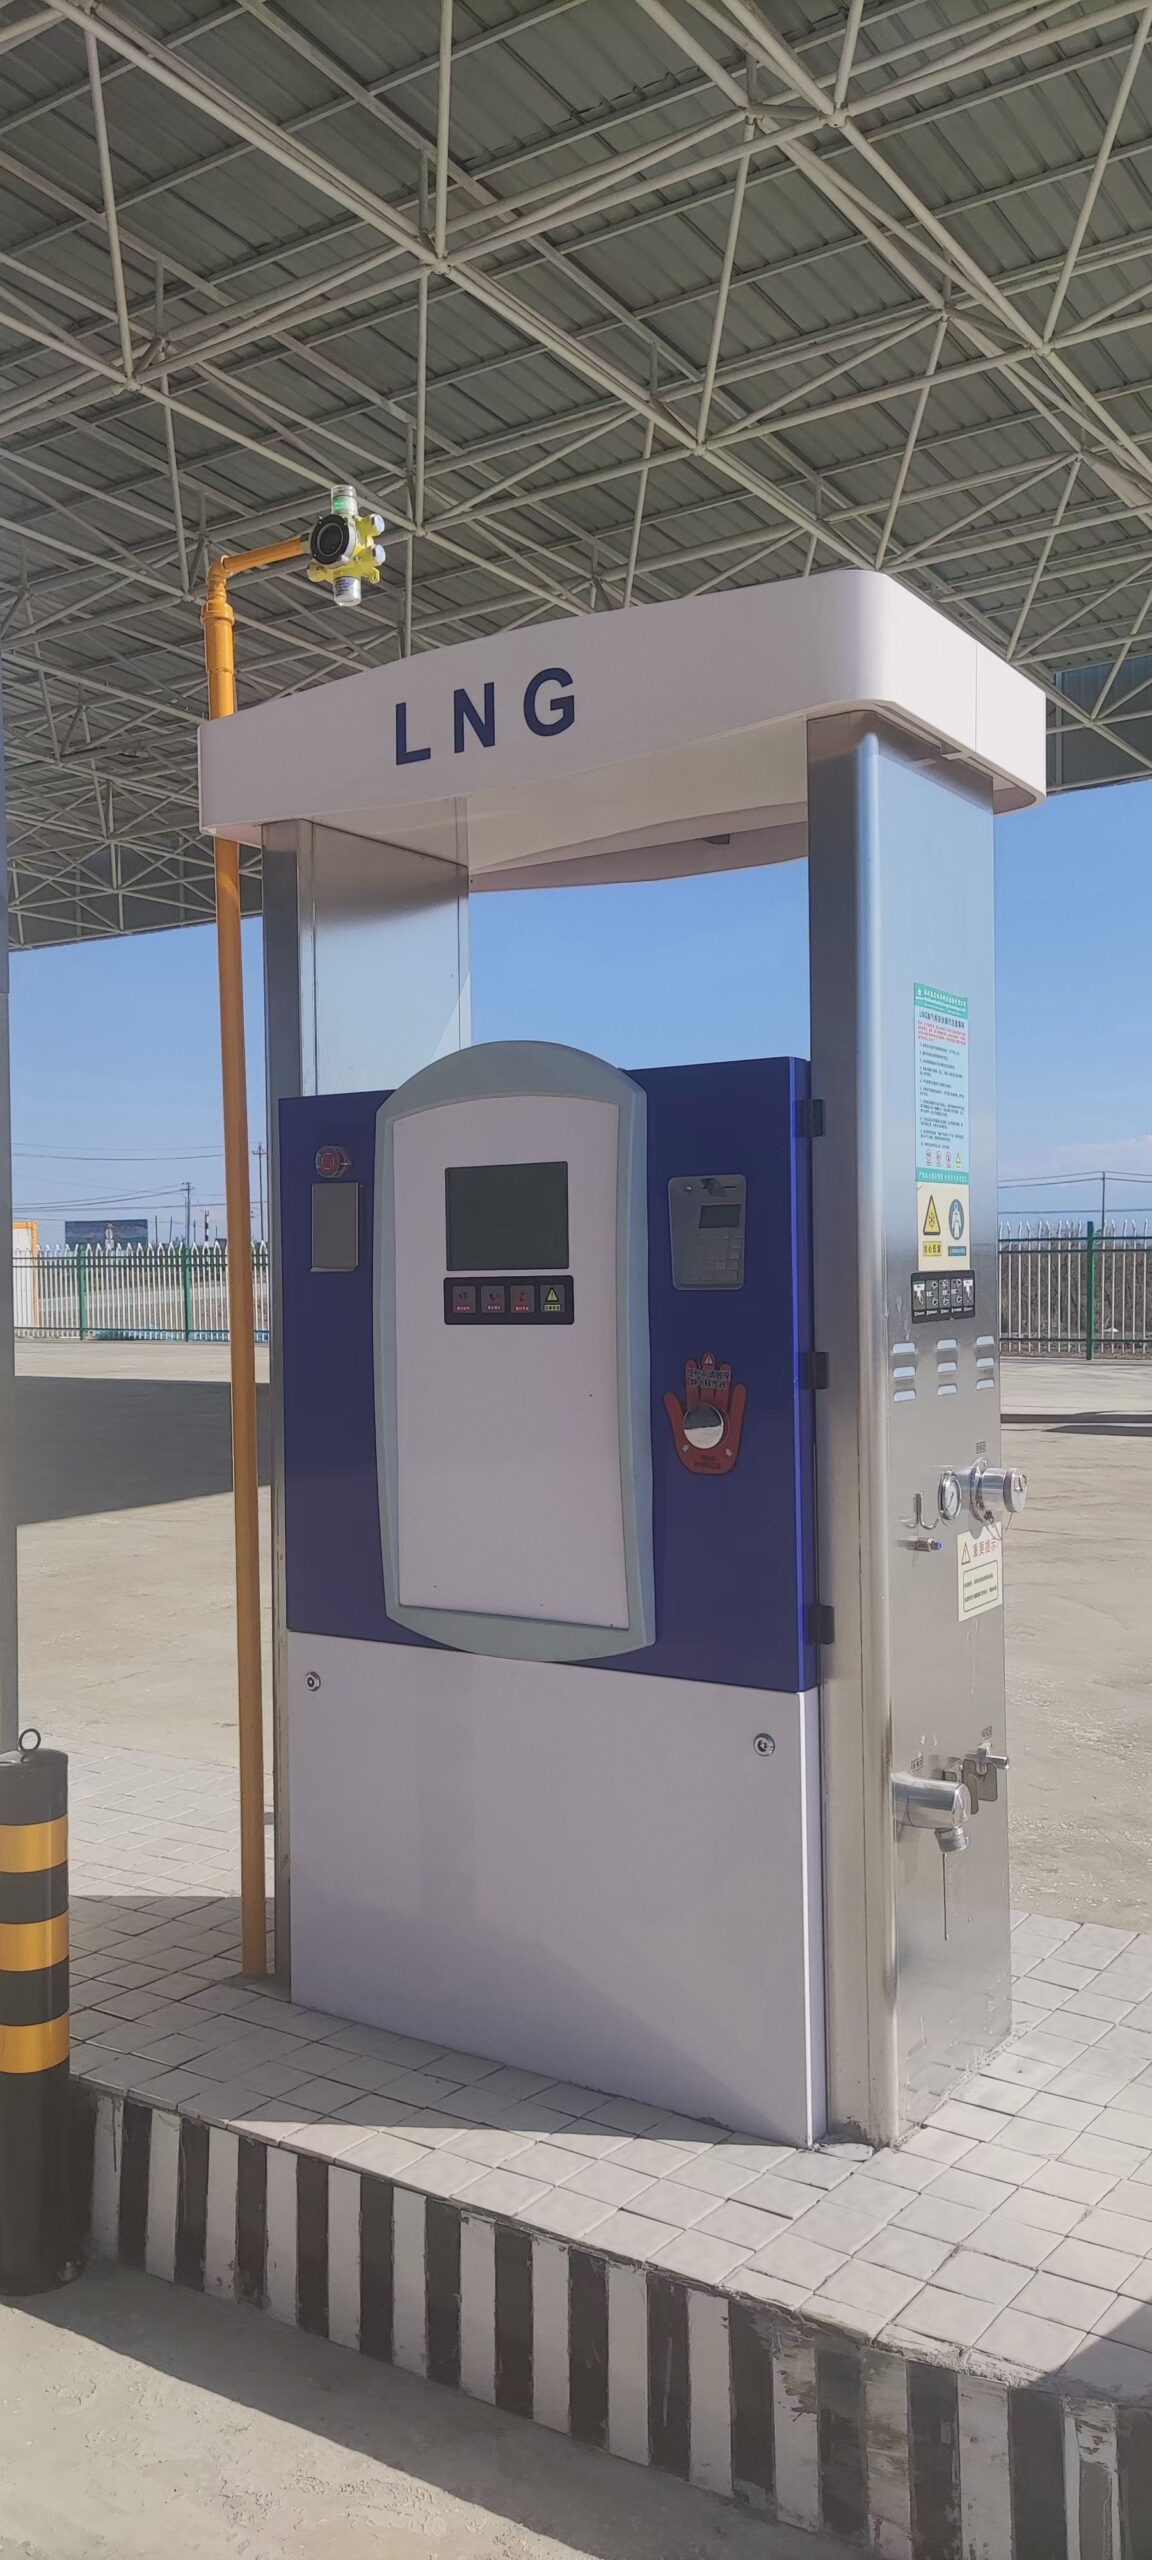 LNG Liquid Nature Gas dispenser with dual nozzles